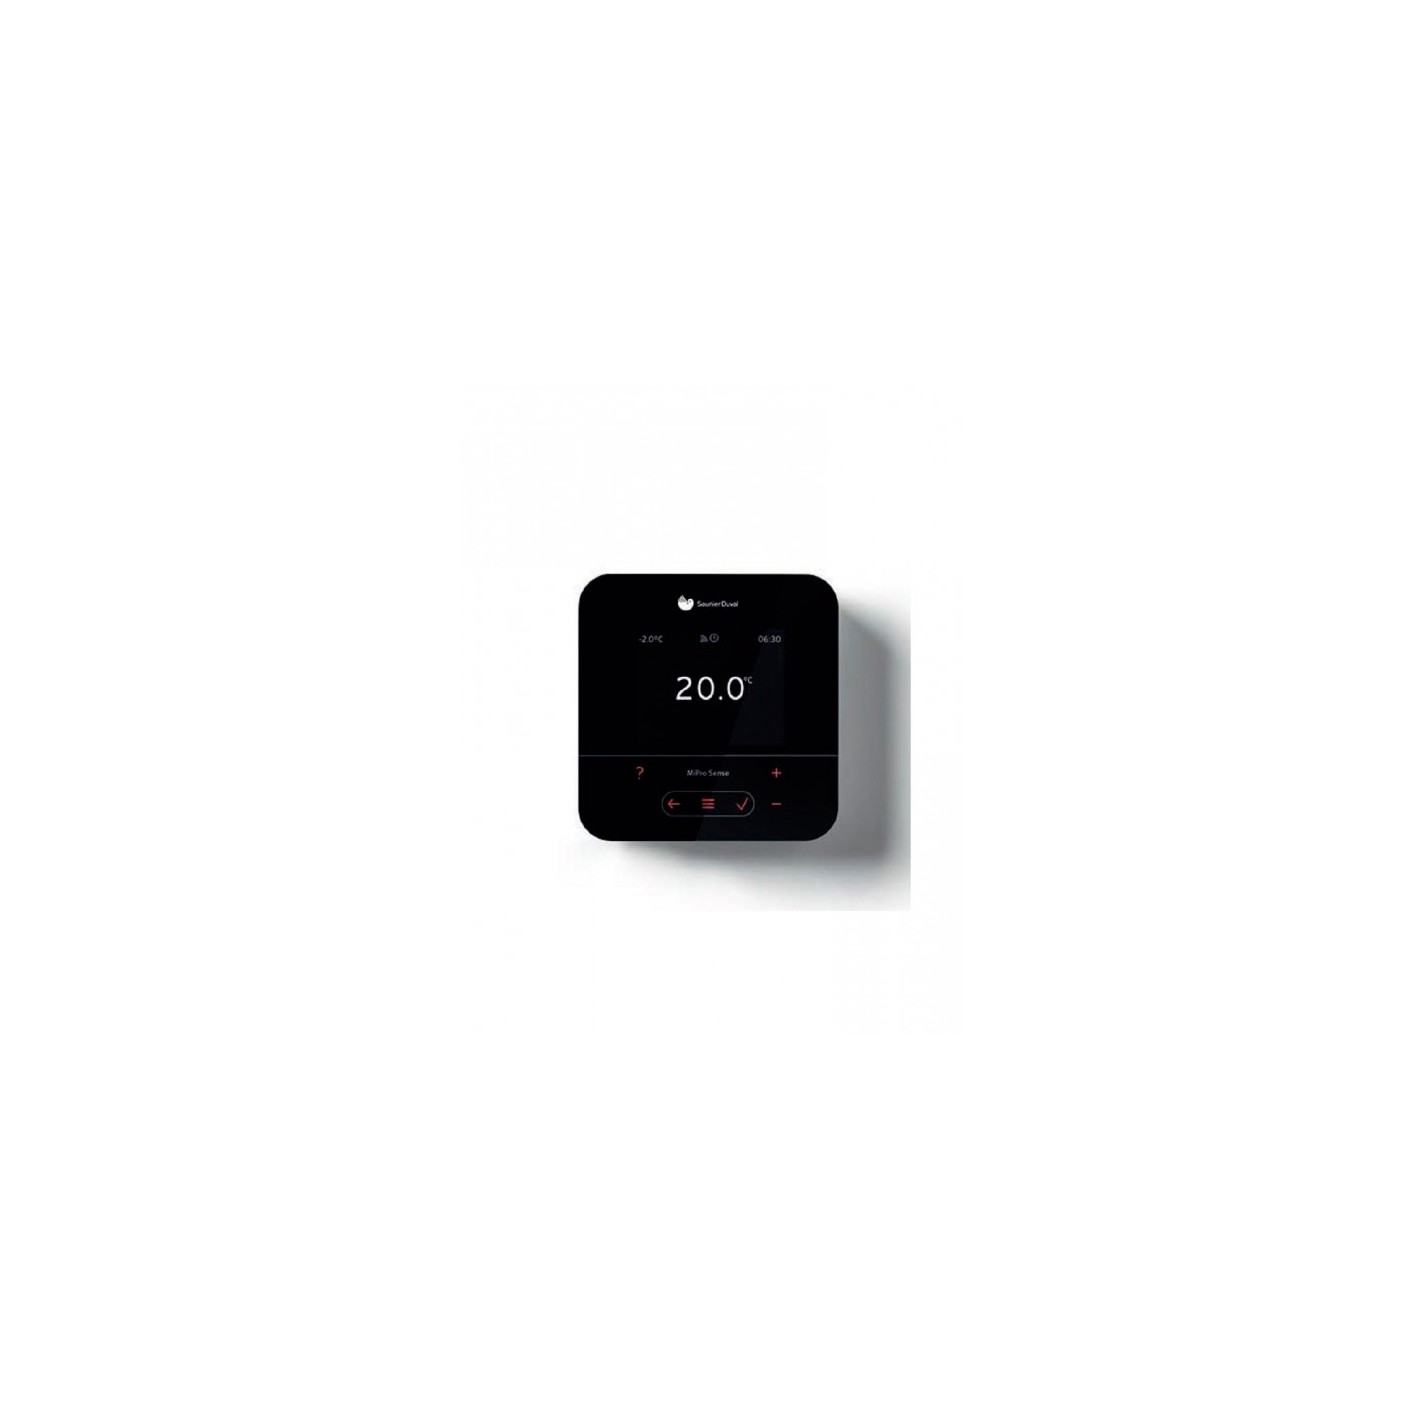 MiGo – Nuevo termostato WiFi modulante – Saunier Duval